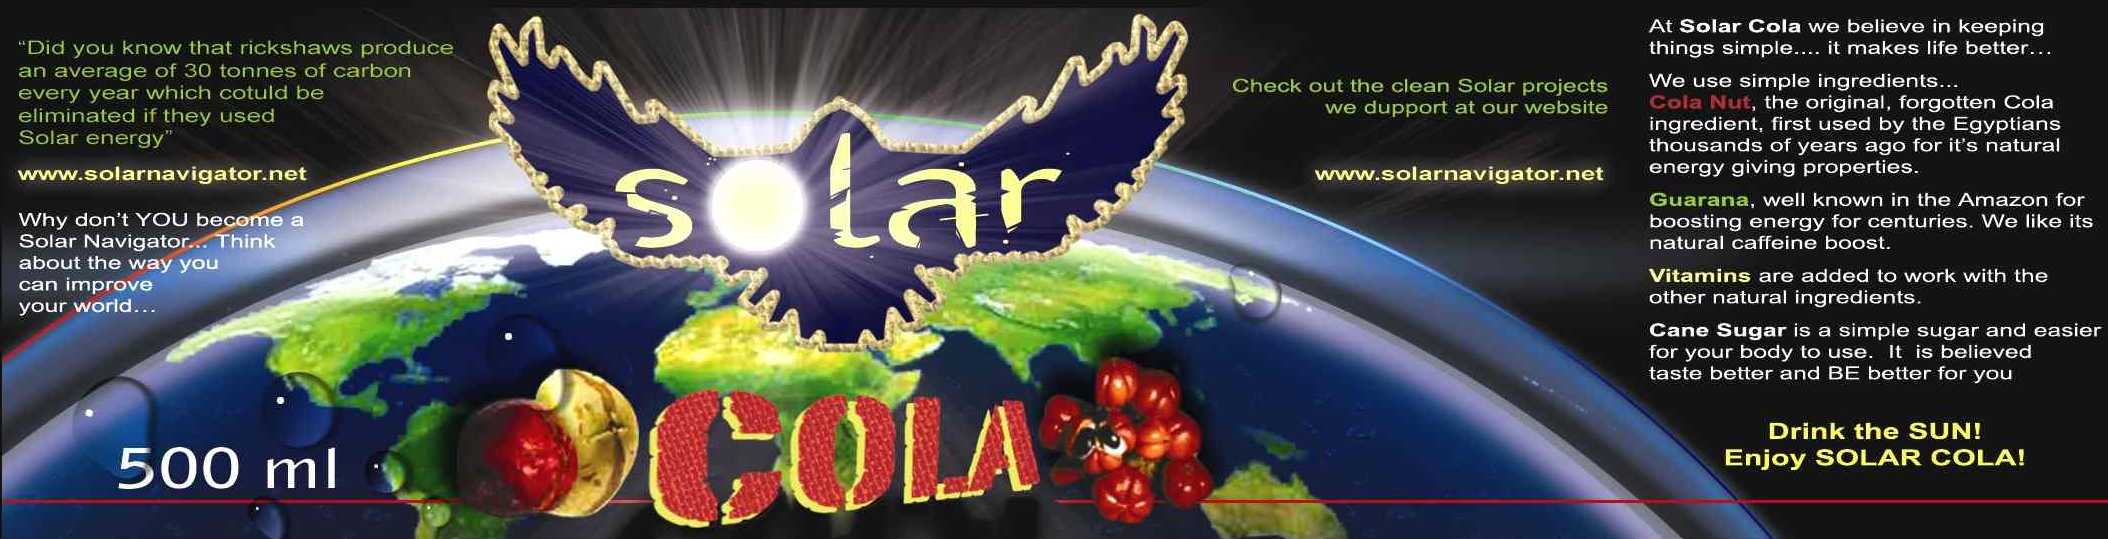 Solar Cola Nigeria Limited